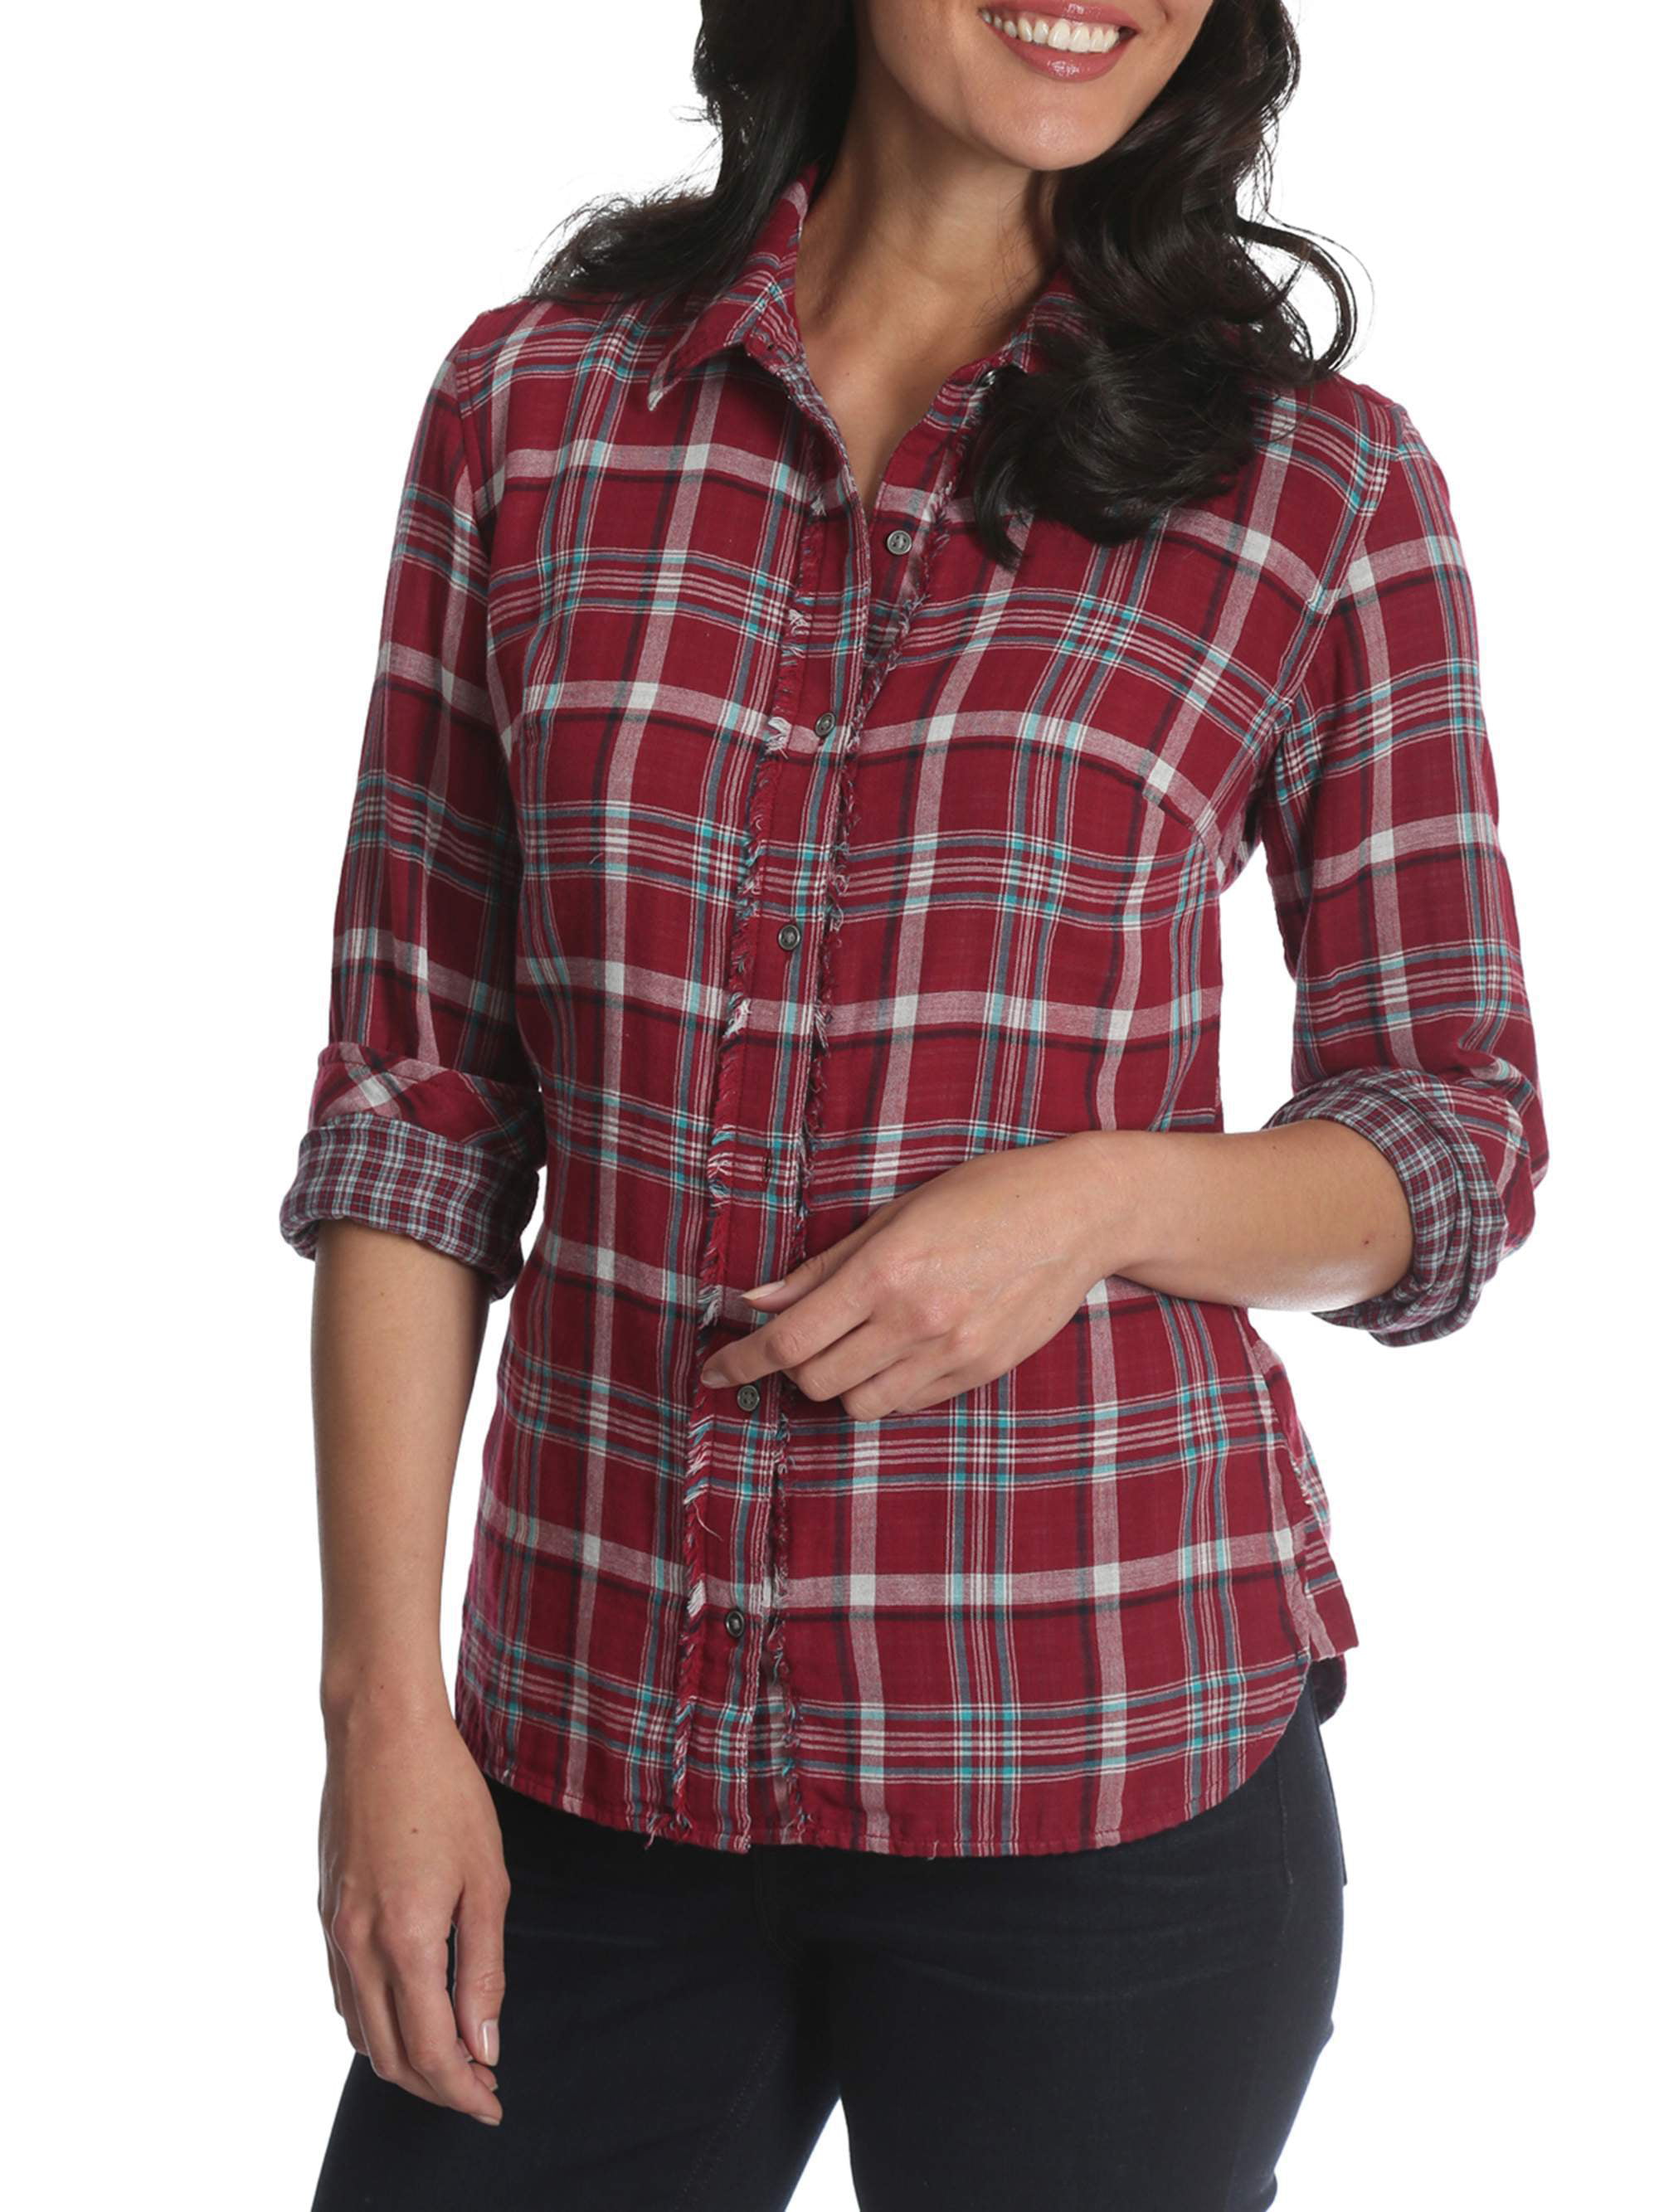 Lee Riders - Women's Long Sleeve Woven Shirt with Fraying - Walmart.com ...